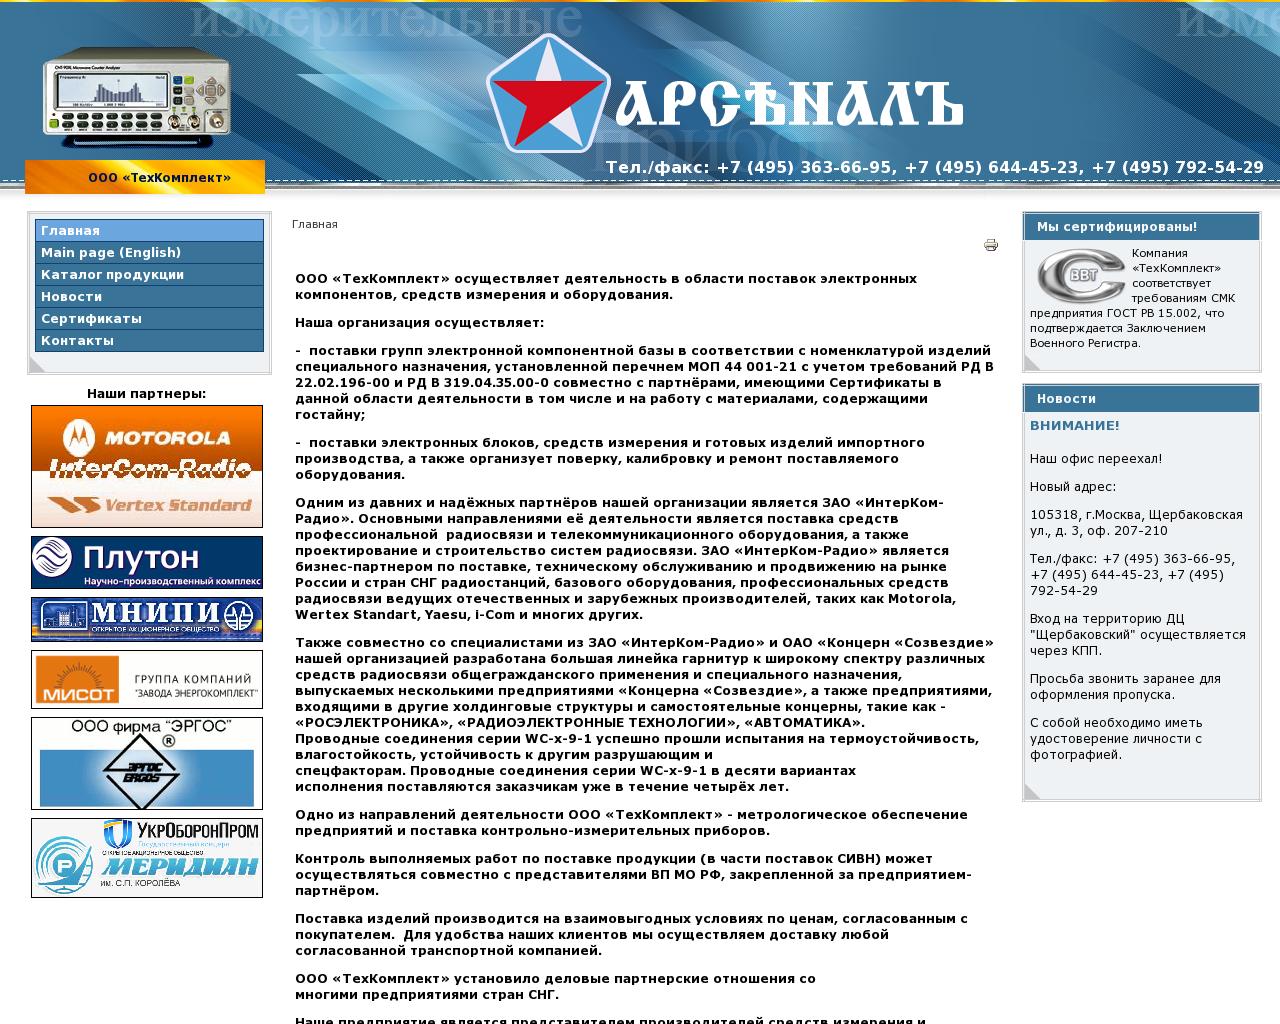 Изображение сайта arsenal-otk.ru в разрешении 1280x1024